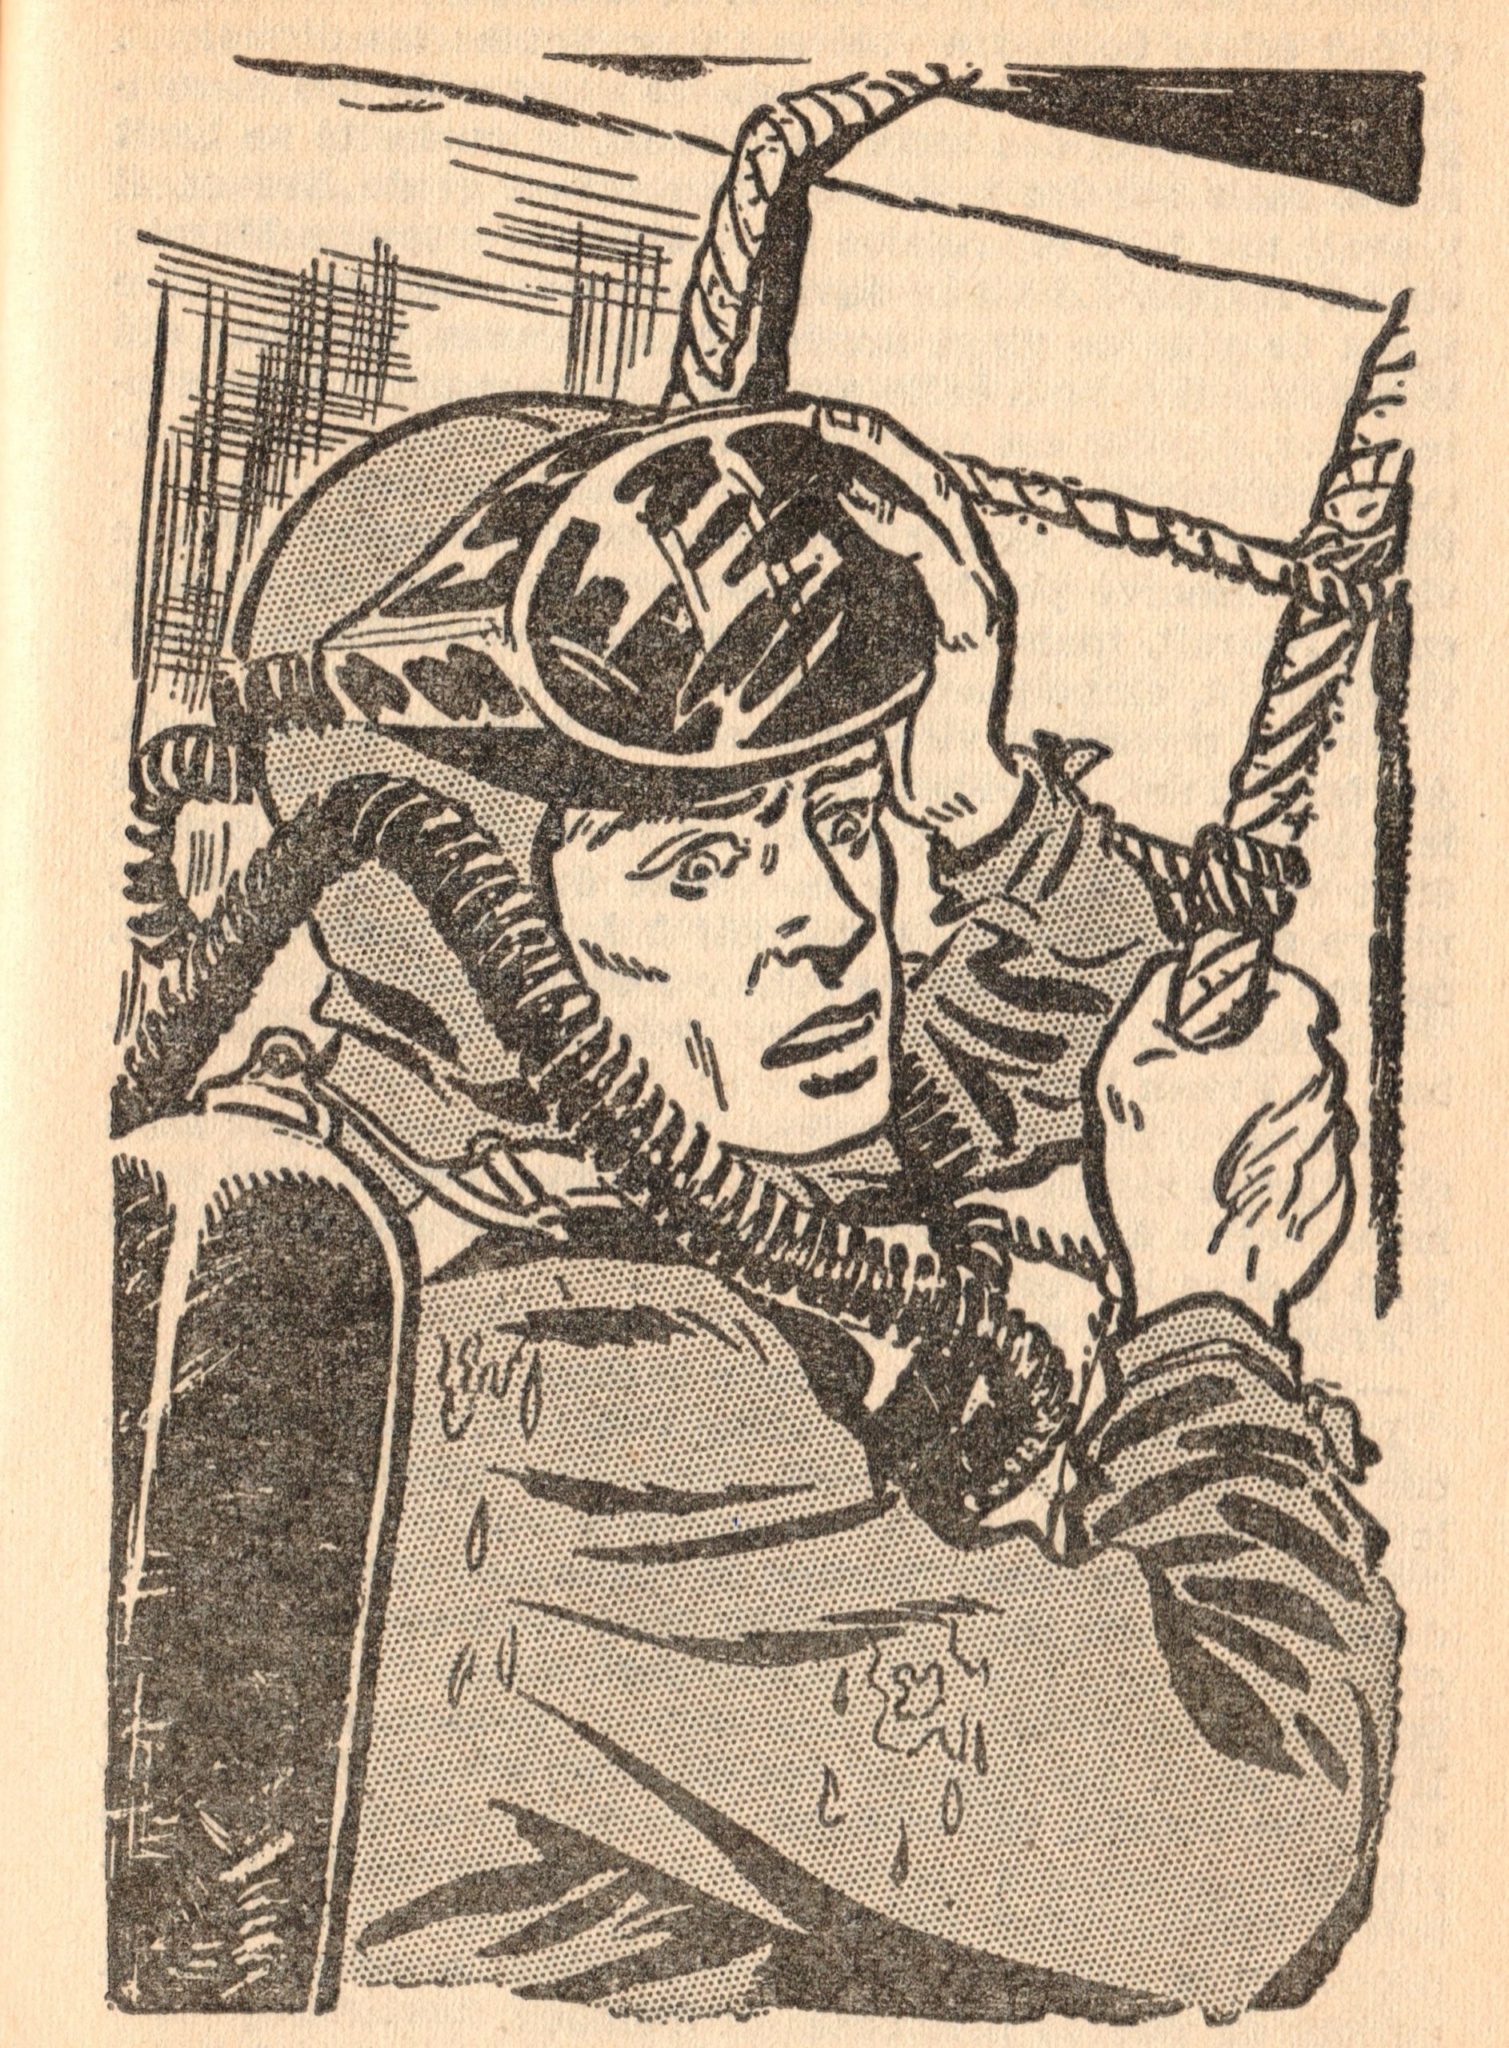 Bob Morane, La galère engloutie, par Henri Vernes.
Illustrations de Dino Attanasio